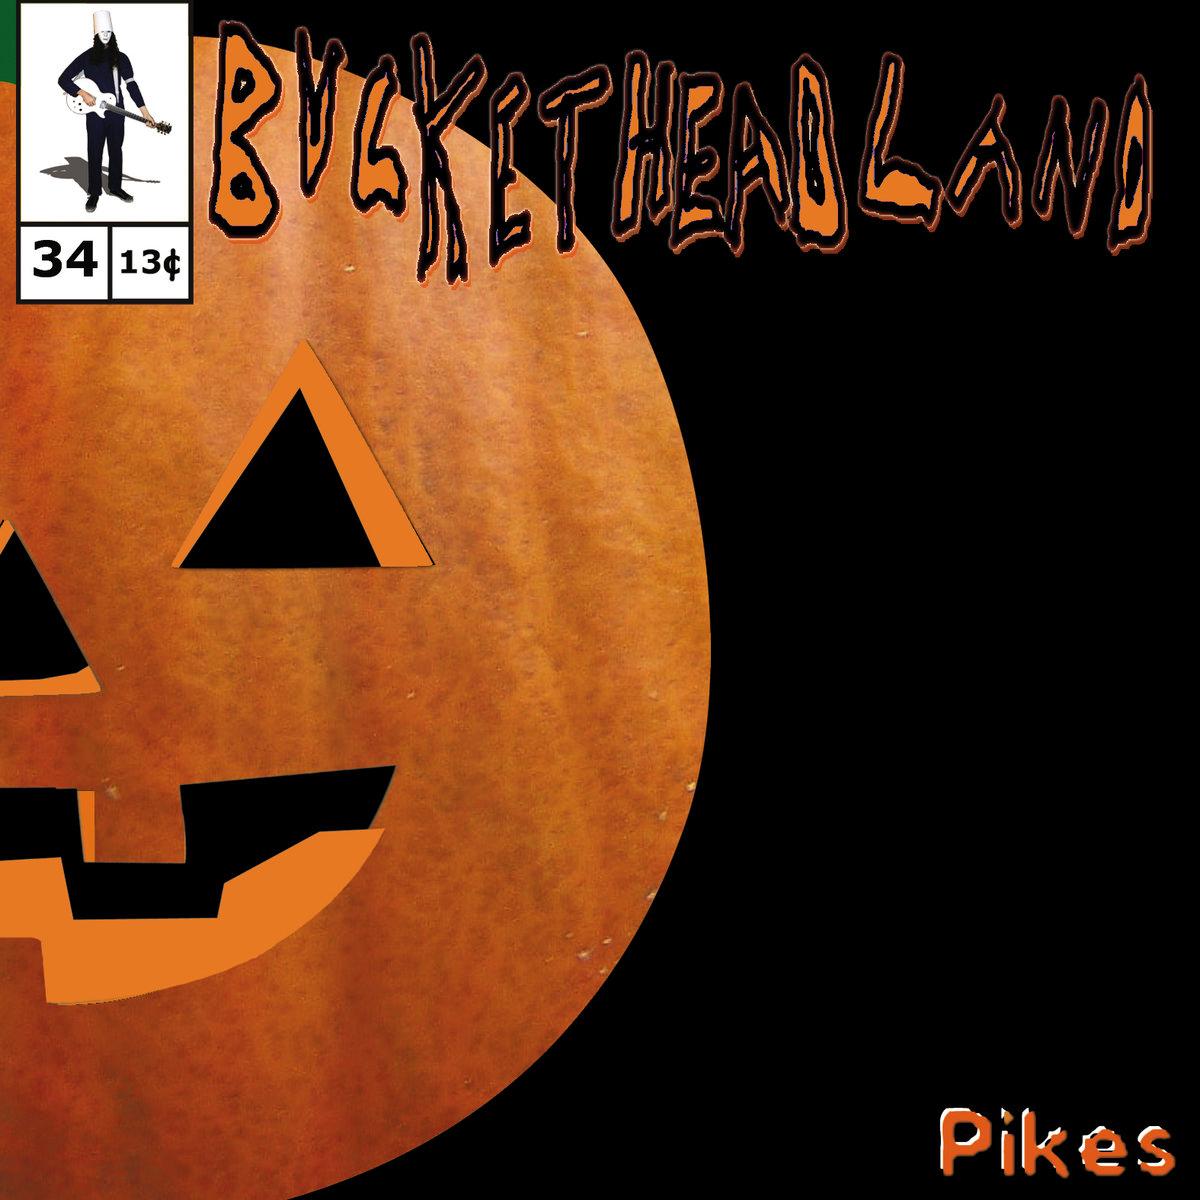 Buckethead - Pike 34: Pikes (2013)